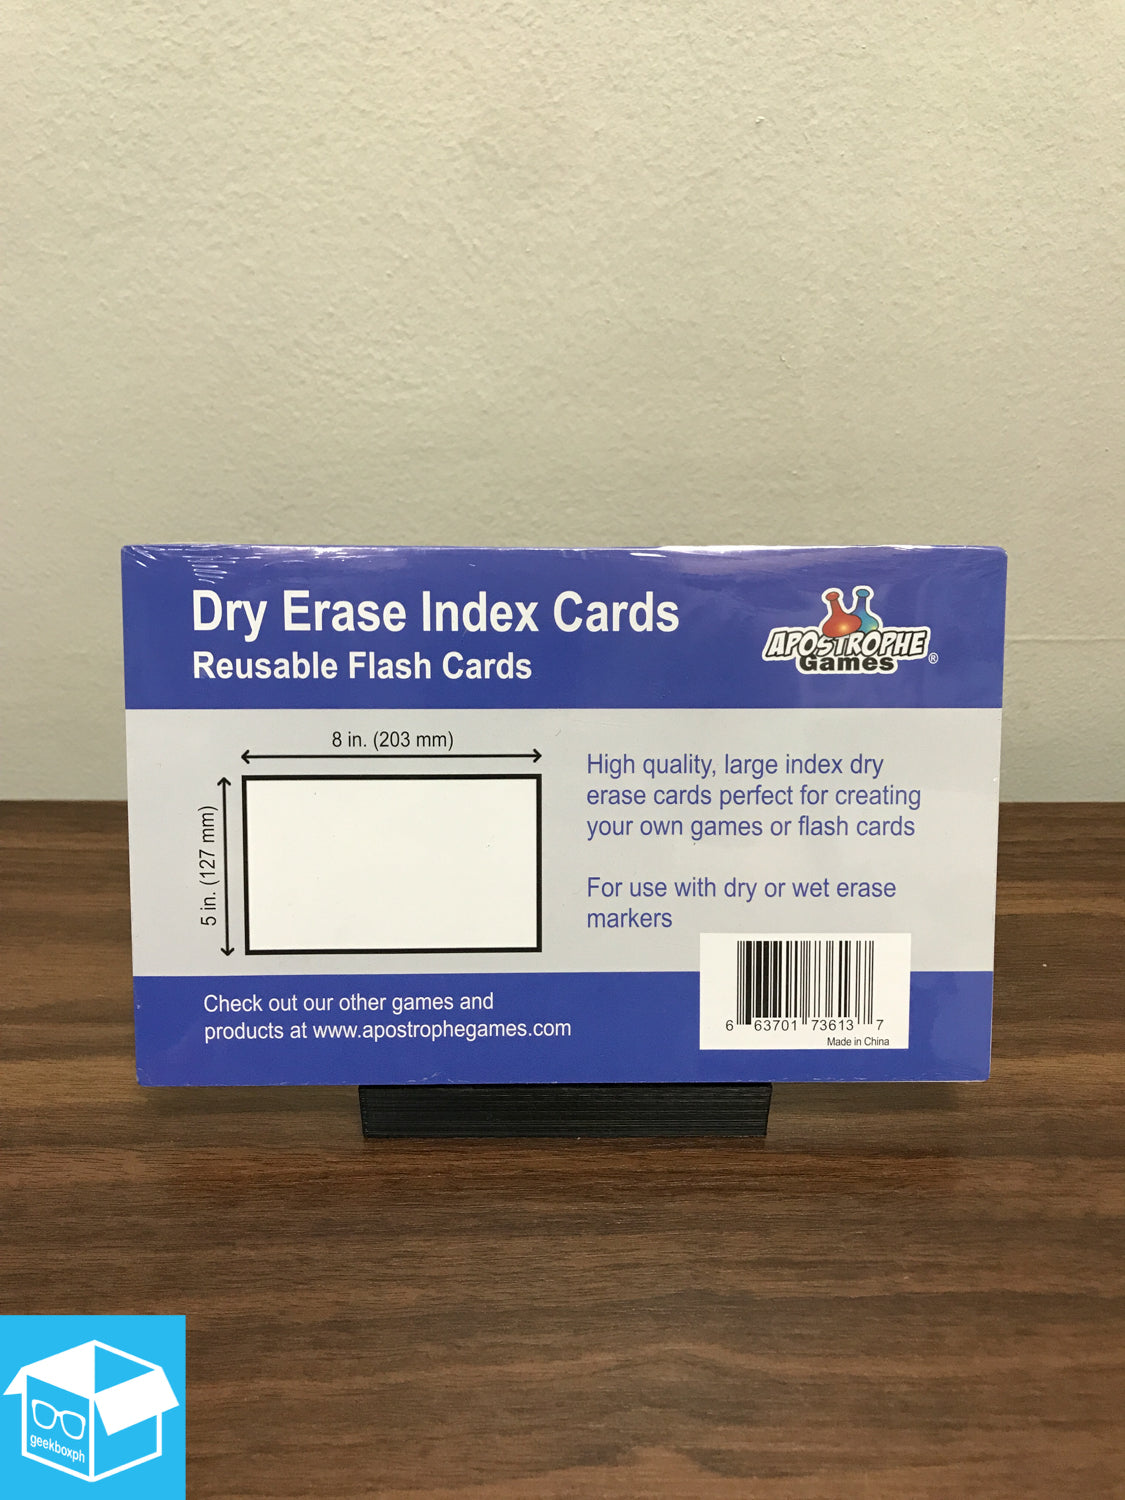 Apostrophe Games Dry Erase Index Cards - 48 Reusable Flash Cards